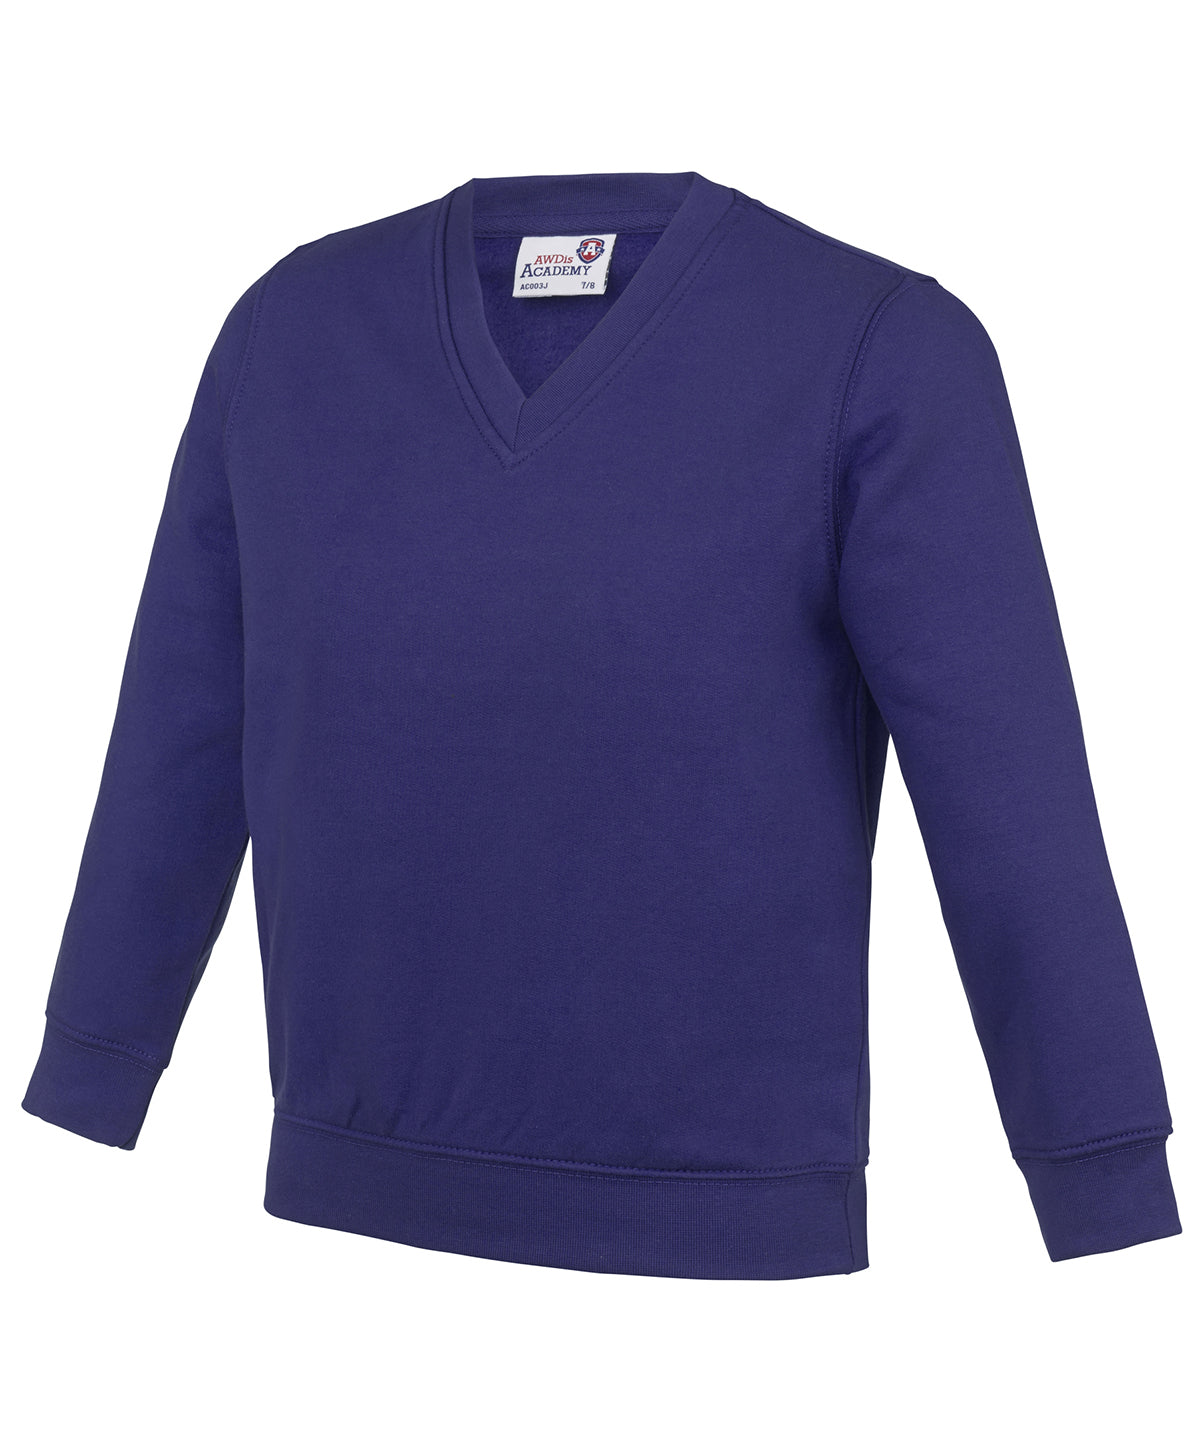 Academy V Neck School Sweatshirt - 10 Colours